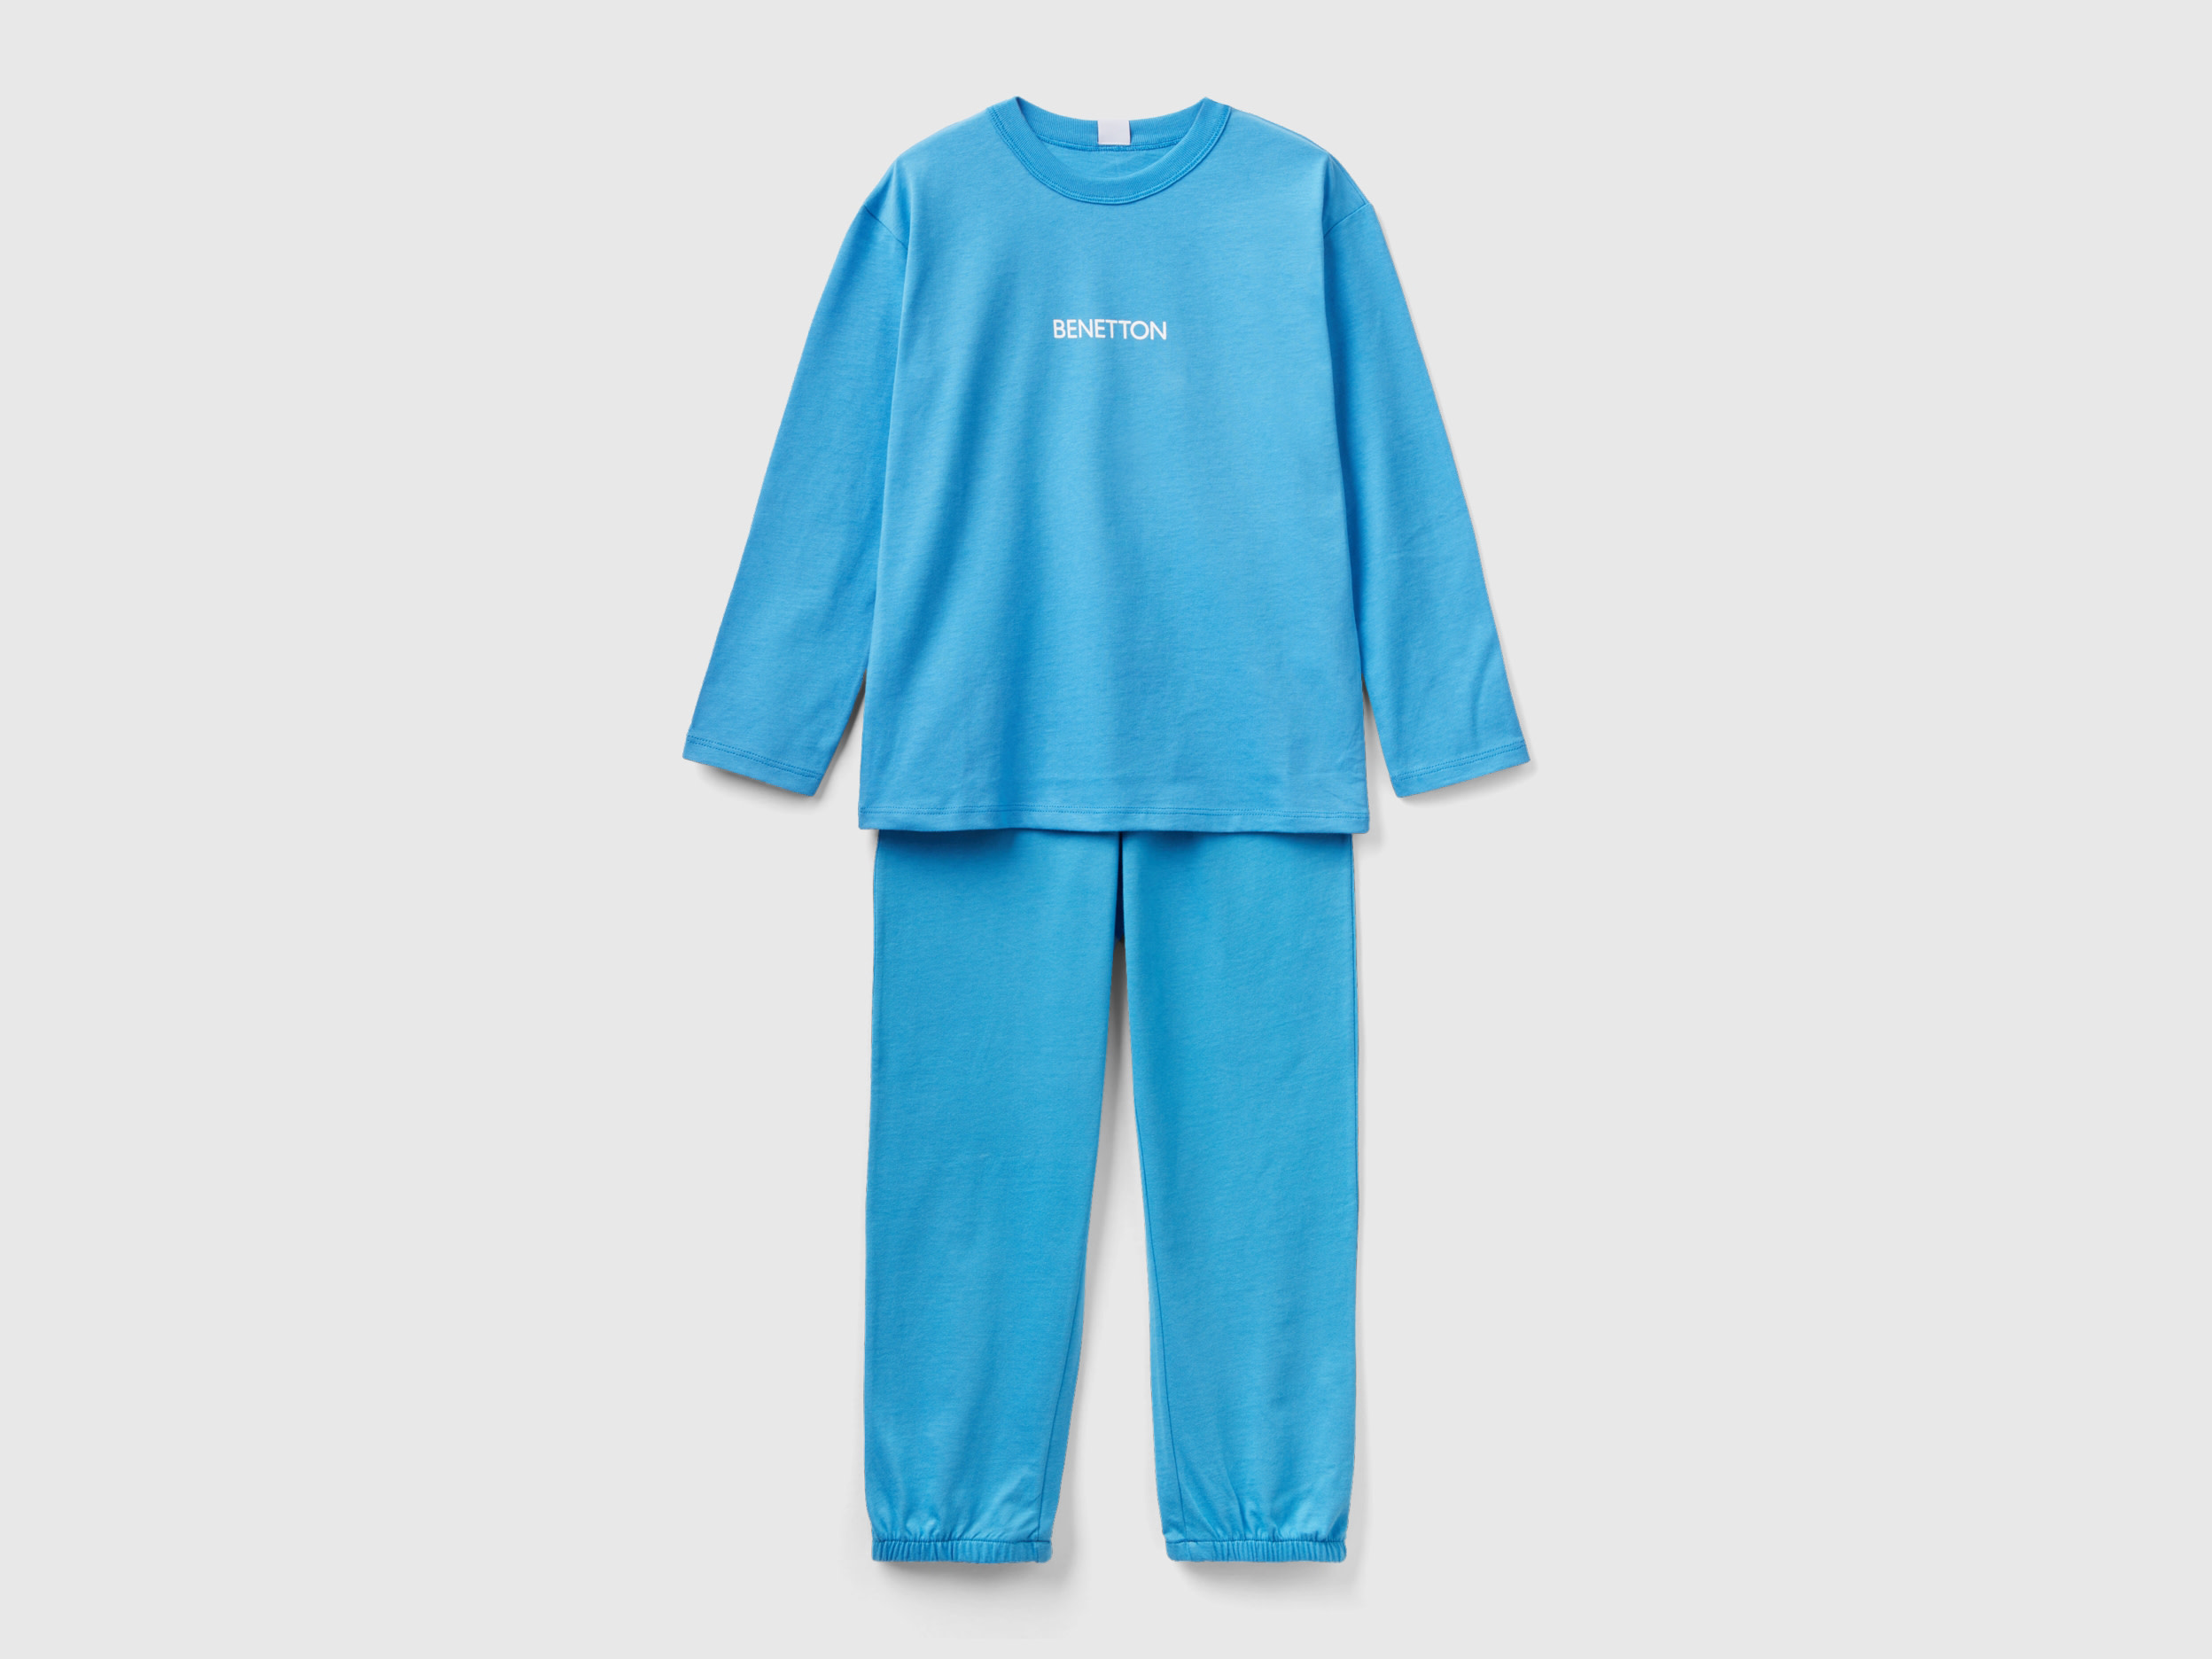 Benetton, Pyjamas In 100% Cotton With Logo, size L, Bright Blue, Kids